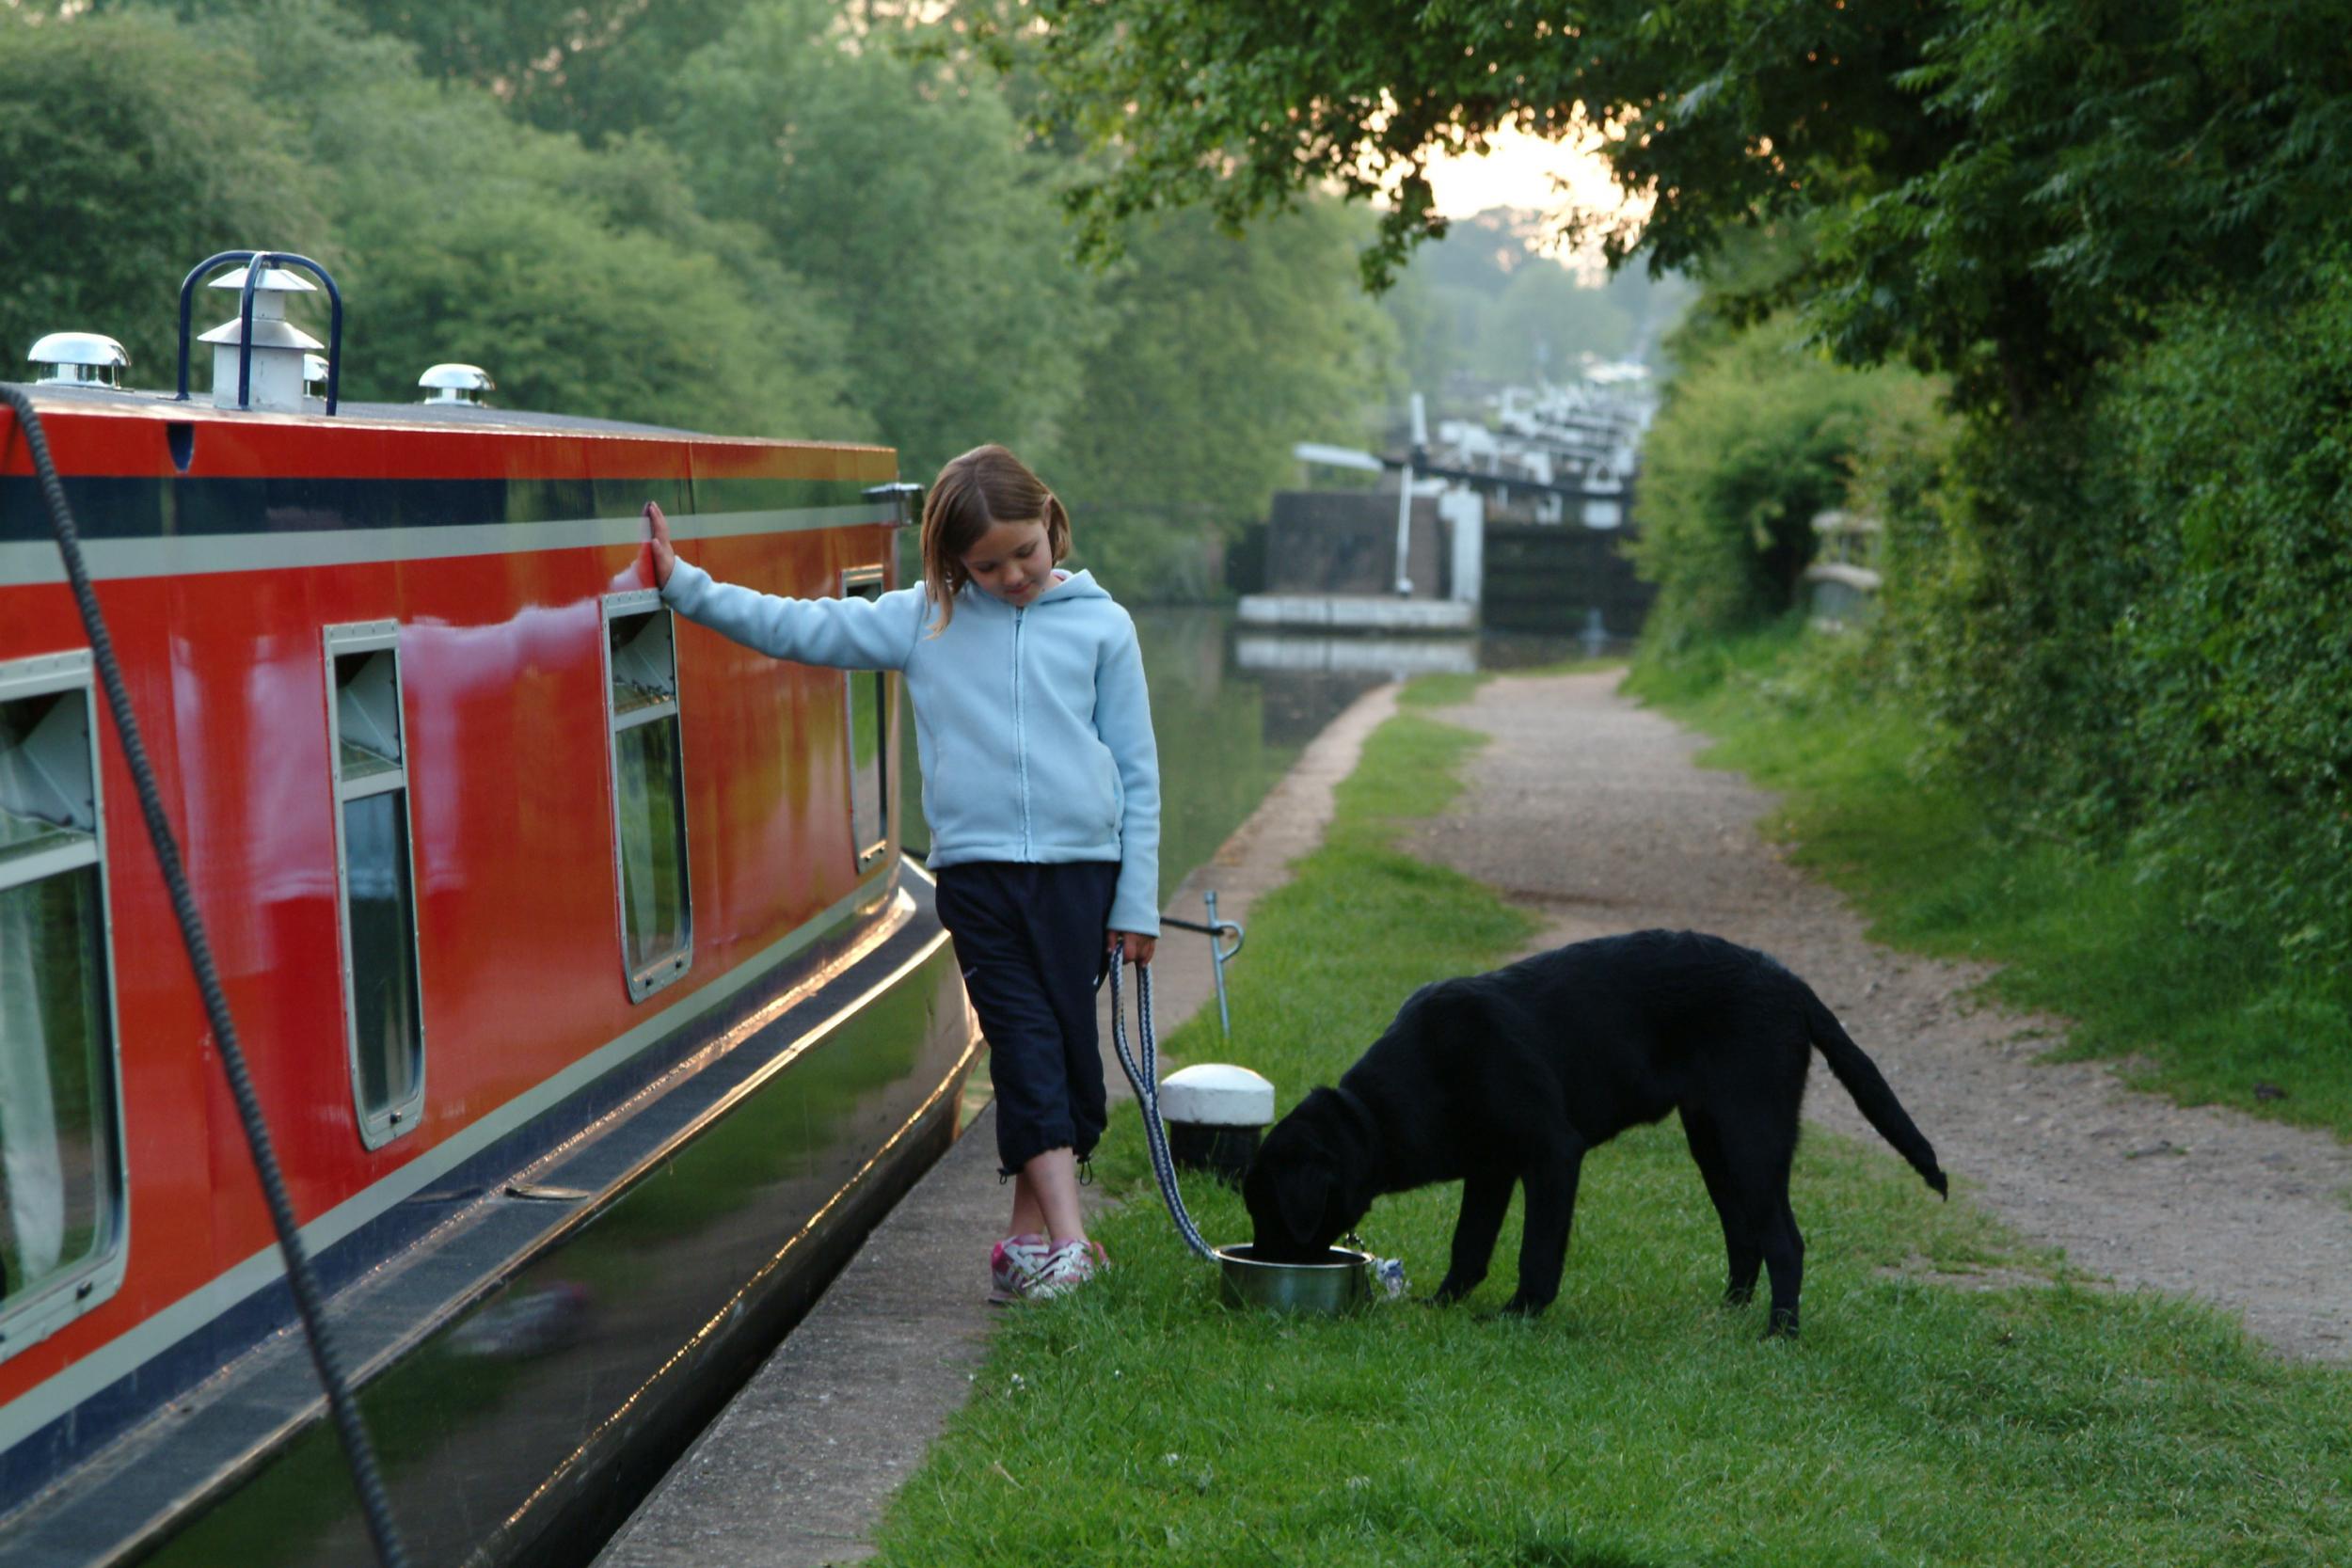 Take a narrowboat holiday along England's waterways